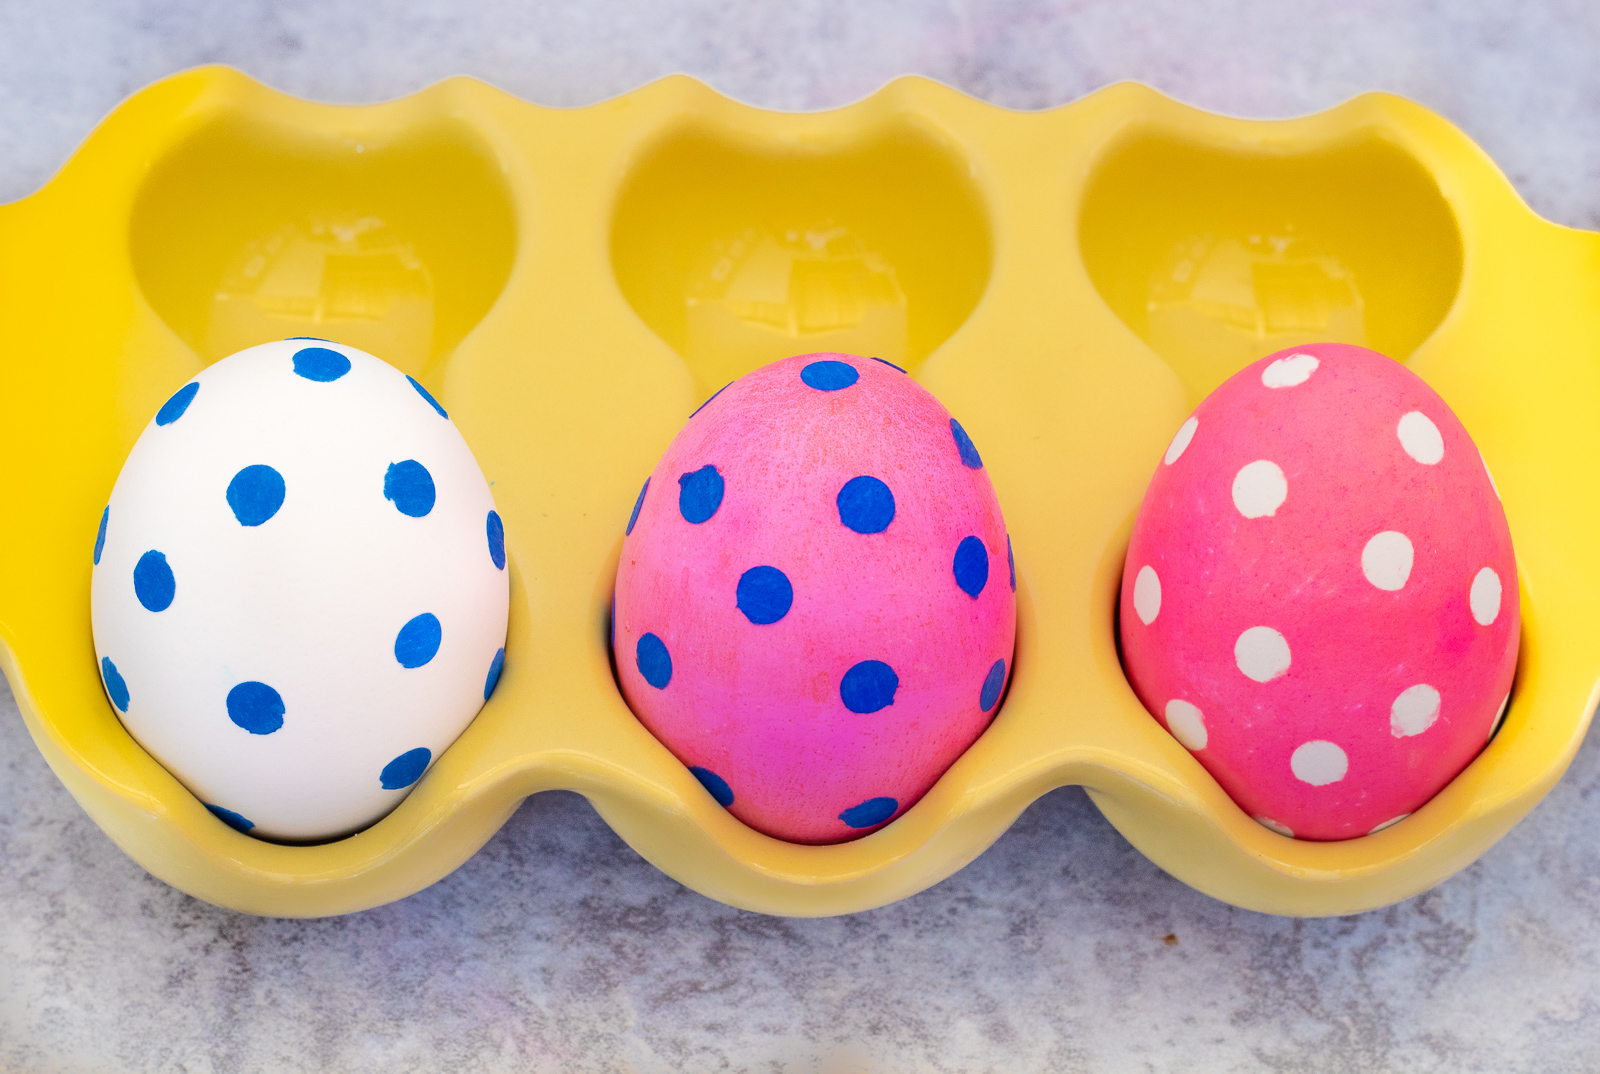 How to make polka dot easter eggs